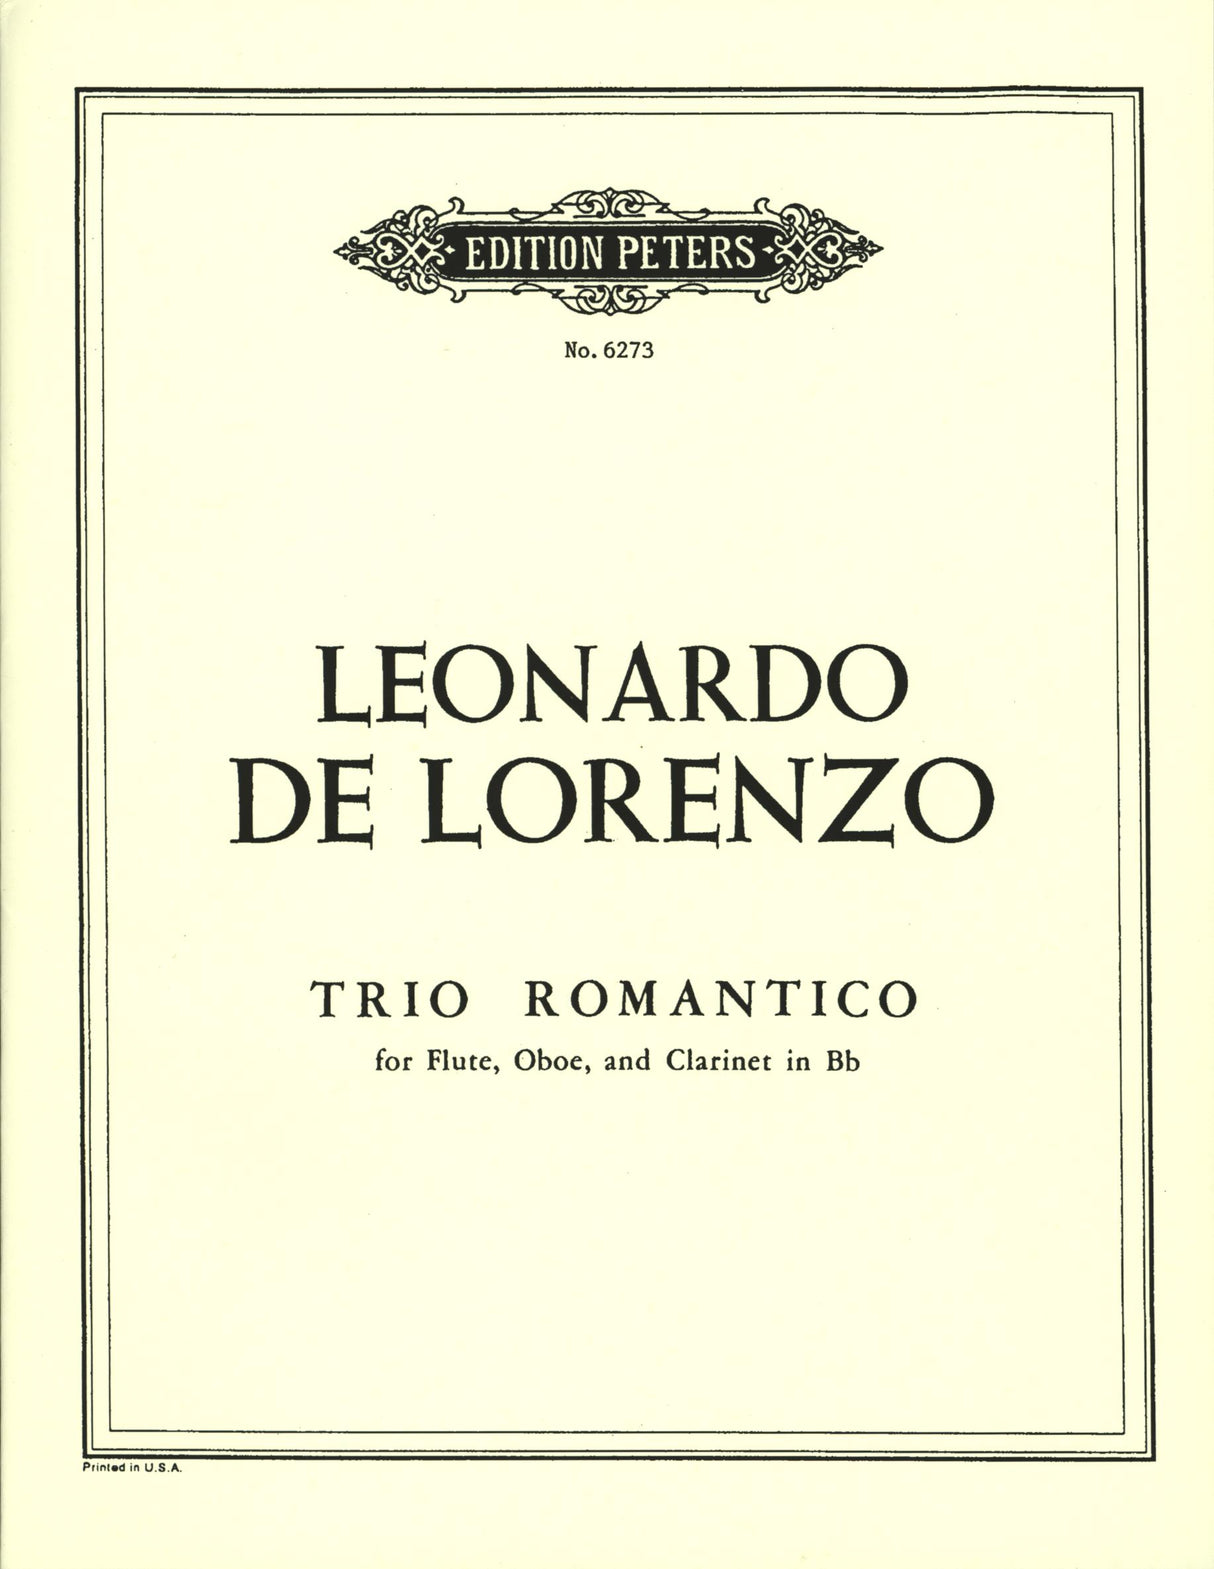 De Lorenzo: Trio Romantico, Op. 78